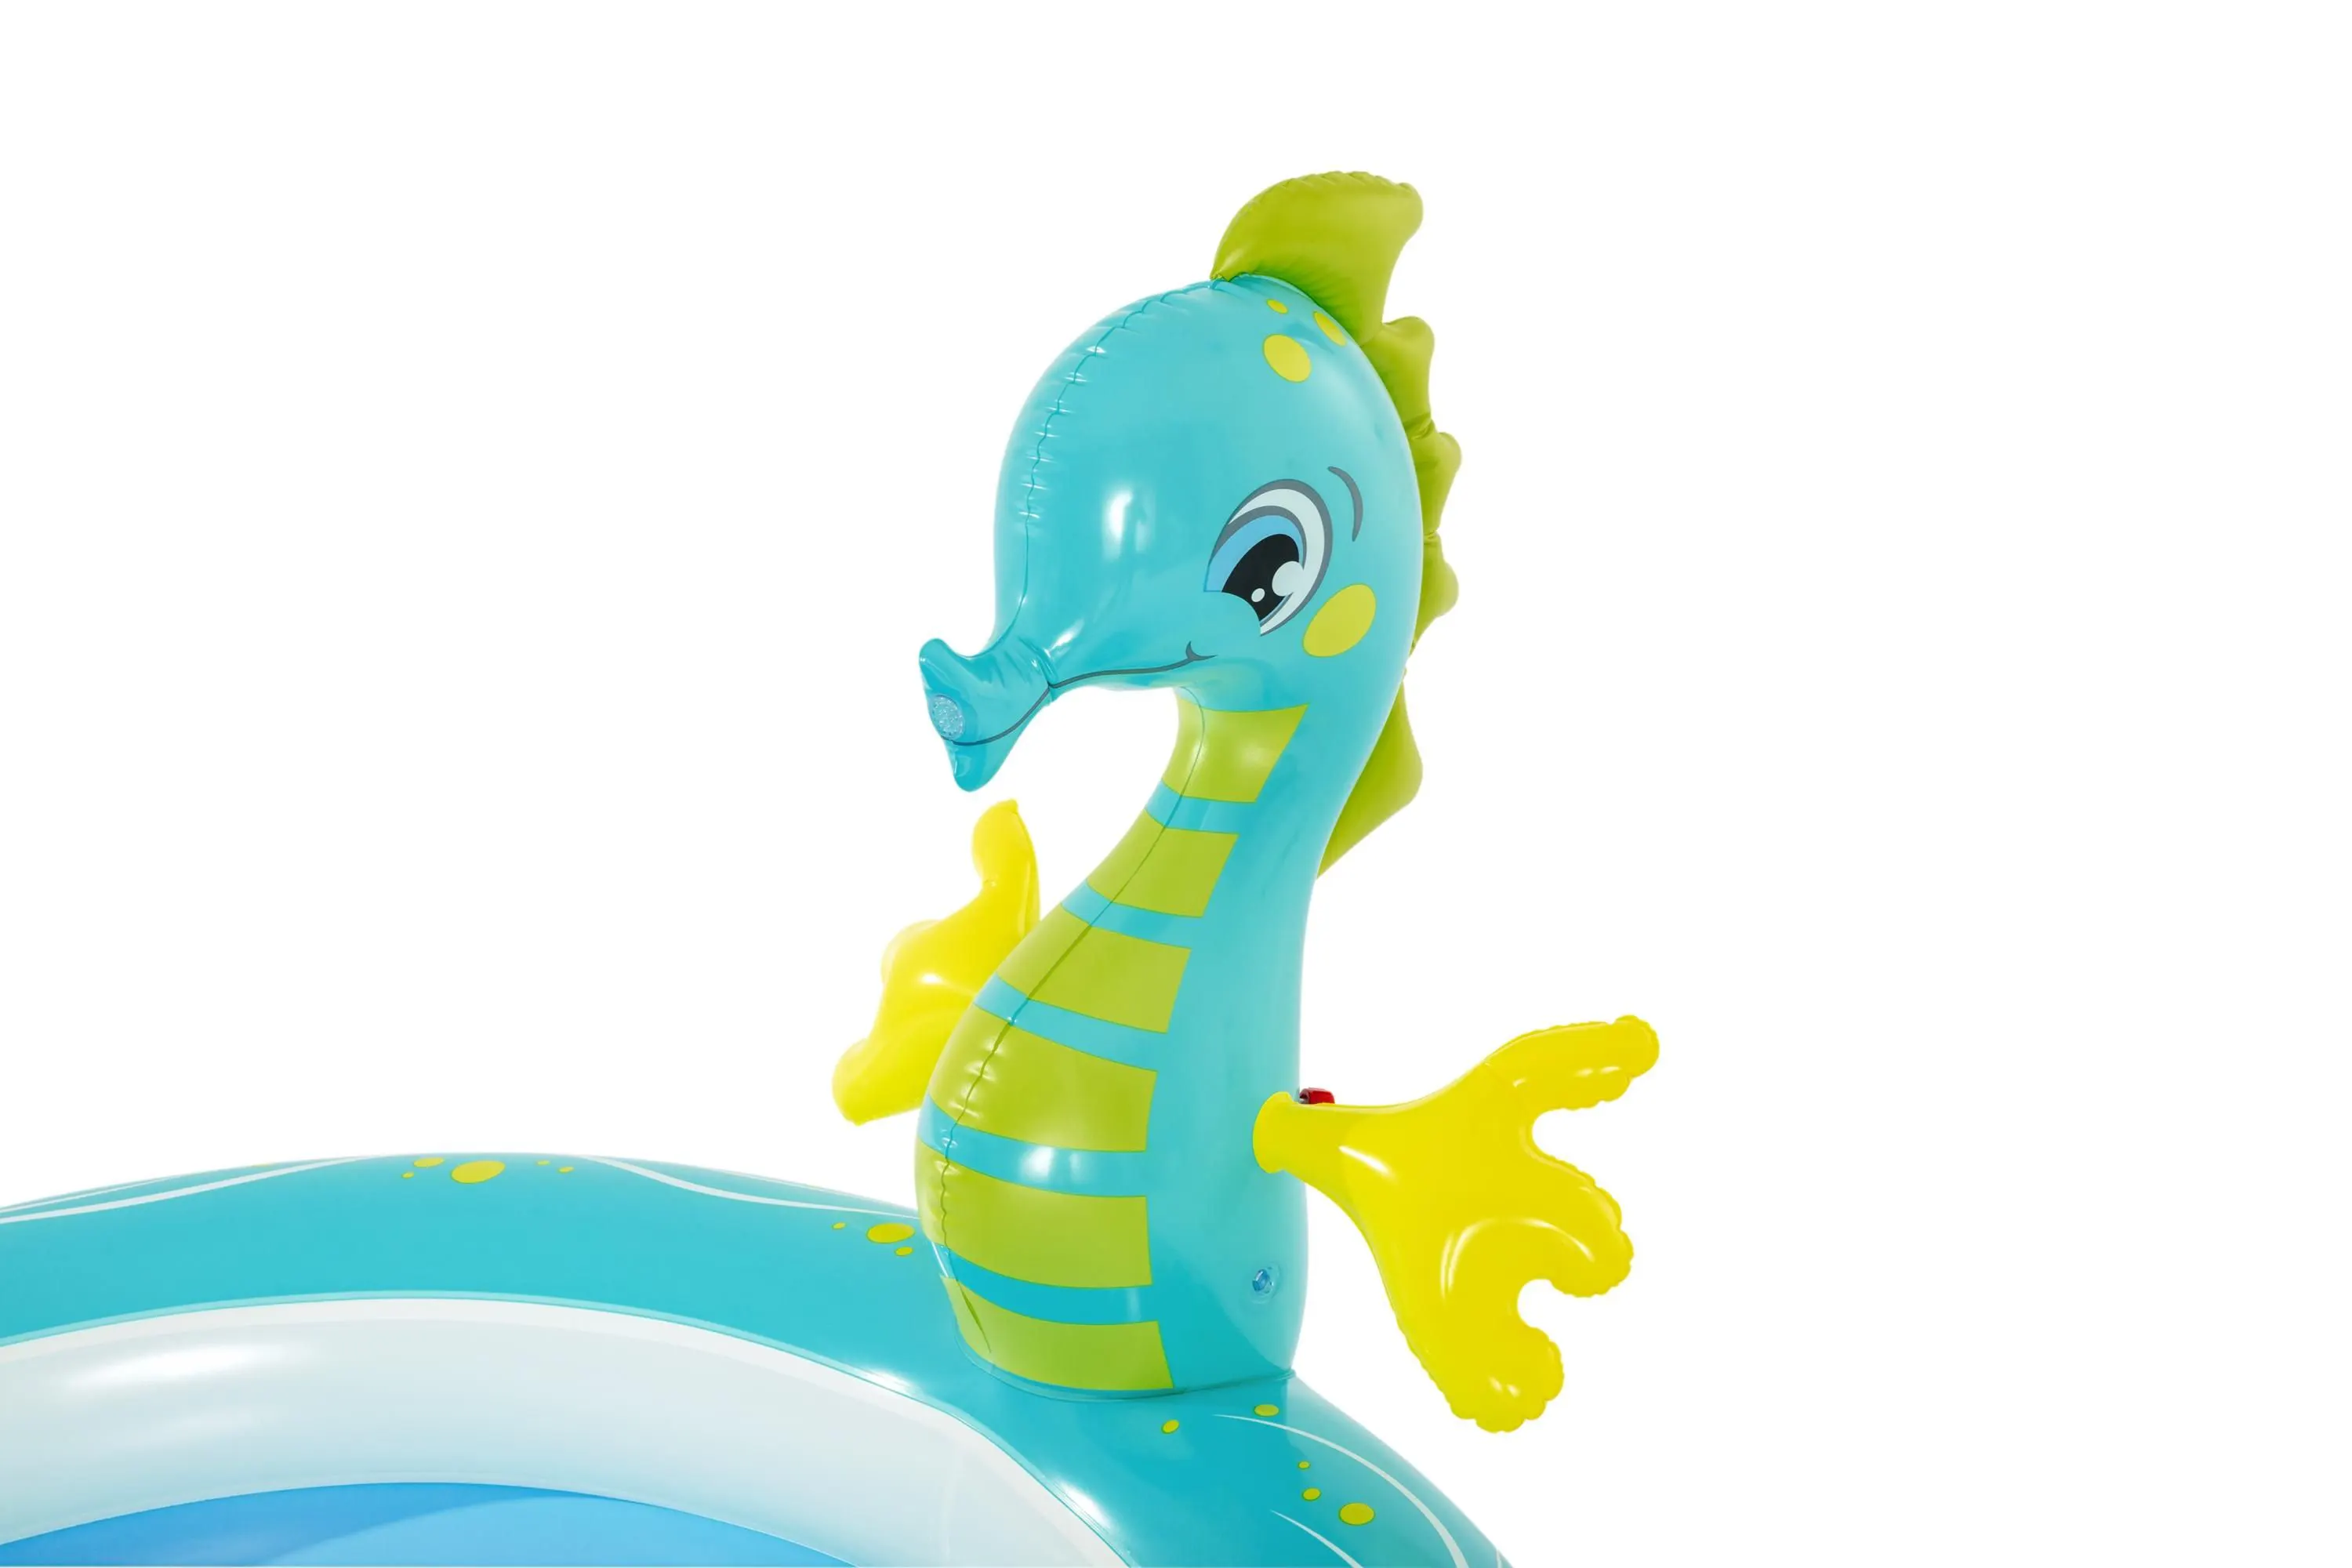 Bestway Seahorse Inflatable Swimming Pool, 140 Liter Capacity, Turquoise, 53114